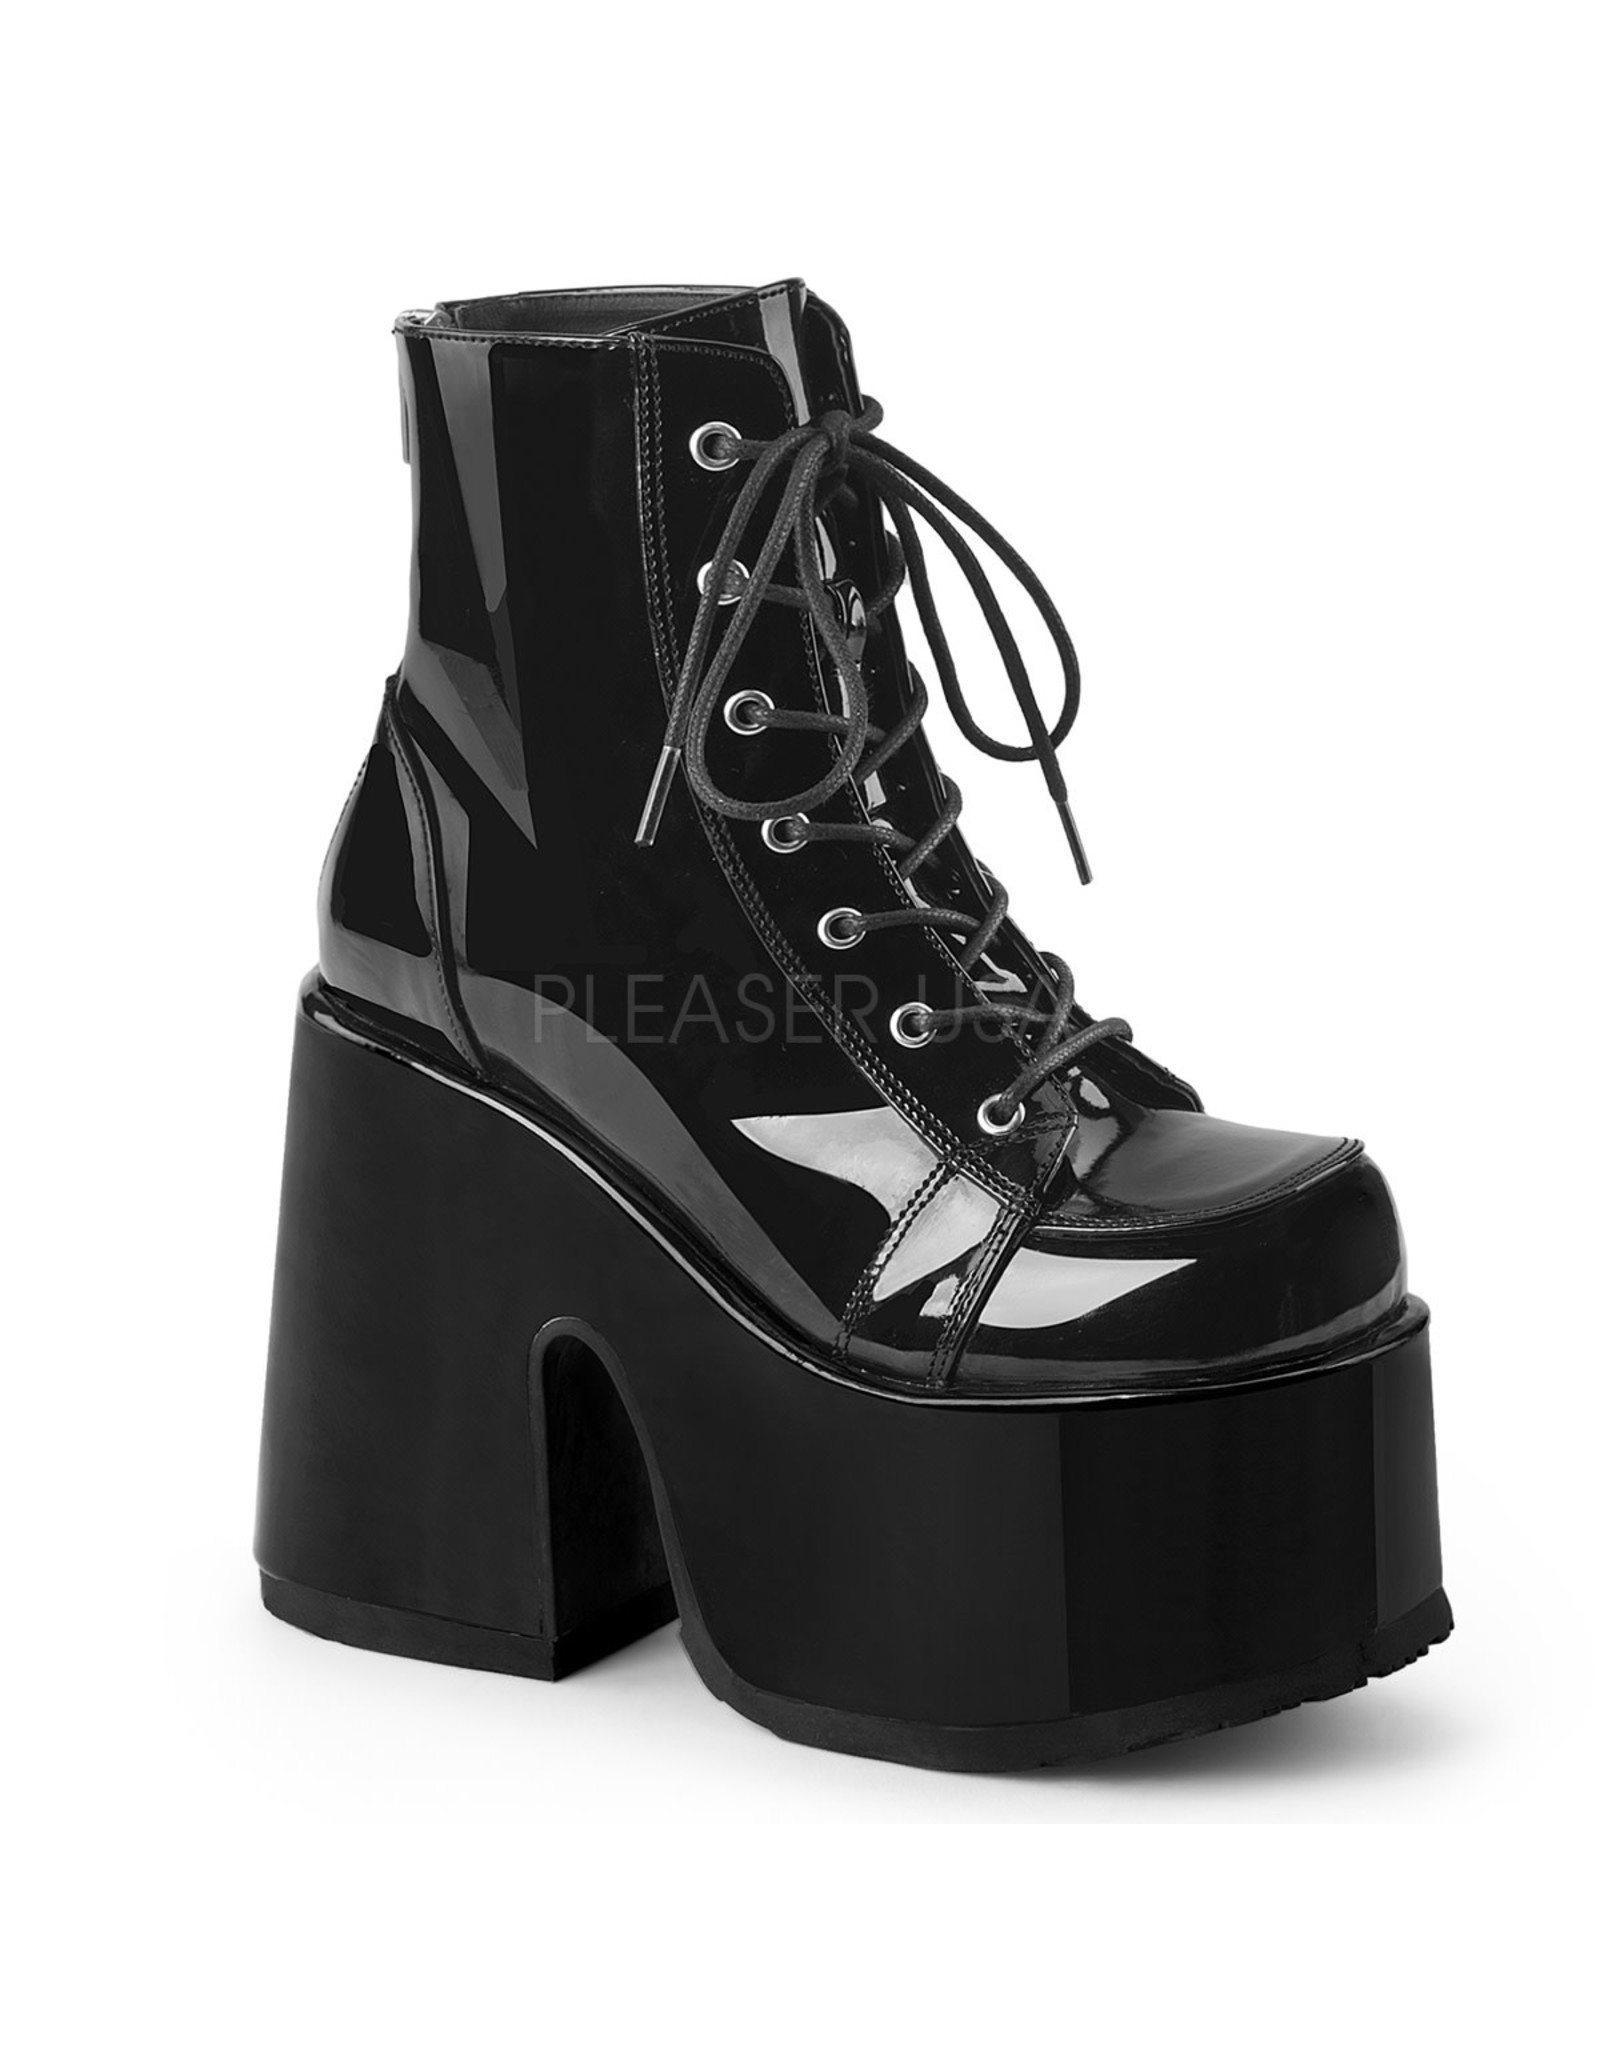 CAMEL-203 5" Chunky Heel, 3" Platform Black Patent Boot, Metal Back Zip Closure D23PB